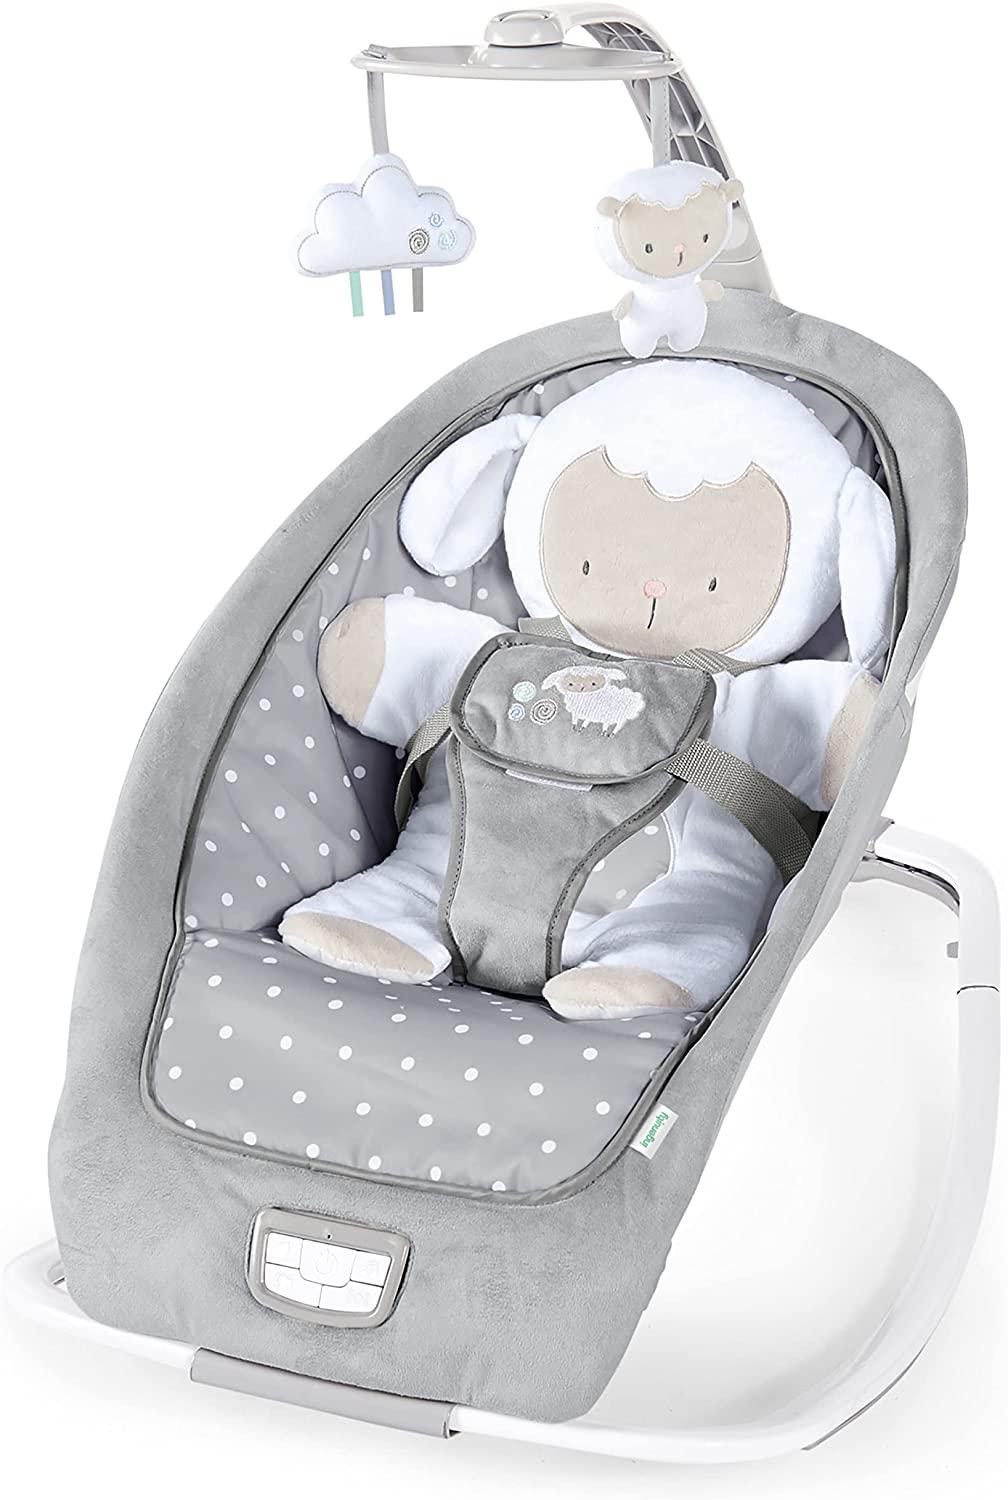 Slike KIDS II Ingenity Ležaljka za bebe Rocking seat Cuddle Lamb sivo-bela